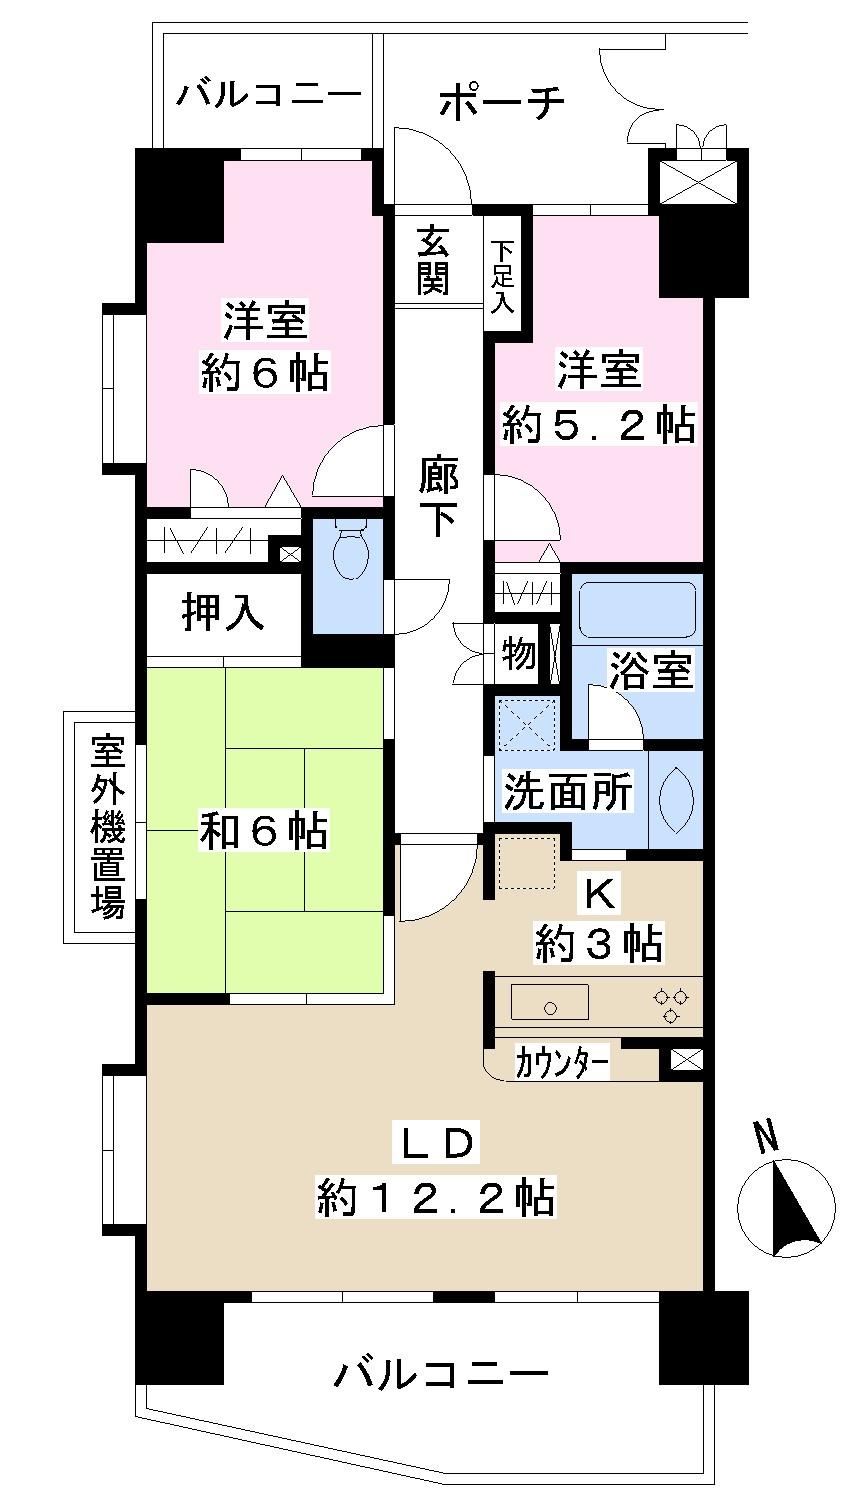 Floor plan. 3LDK, Price 19.9 million yen, Occupied area 70.86 sq m , Balcony area 13.59 sq m southwest angle room, Double-sided balcony